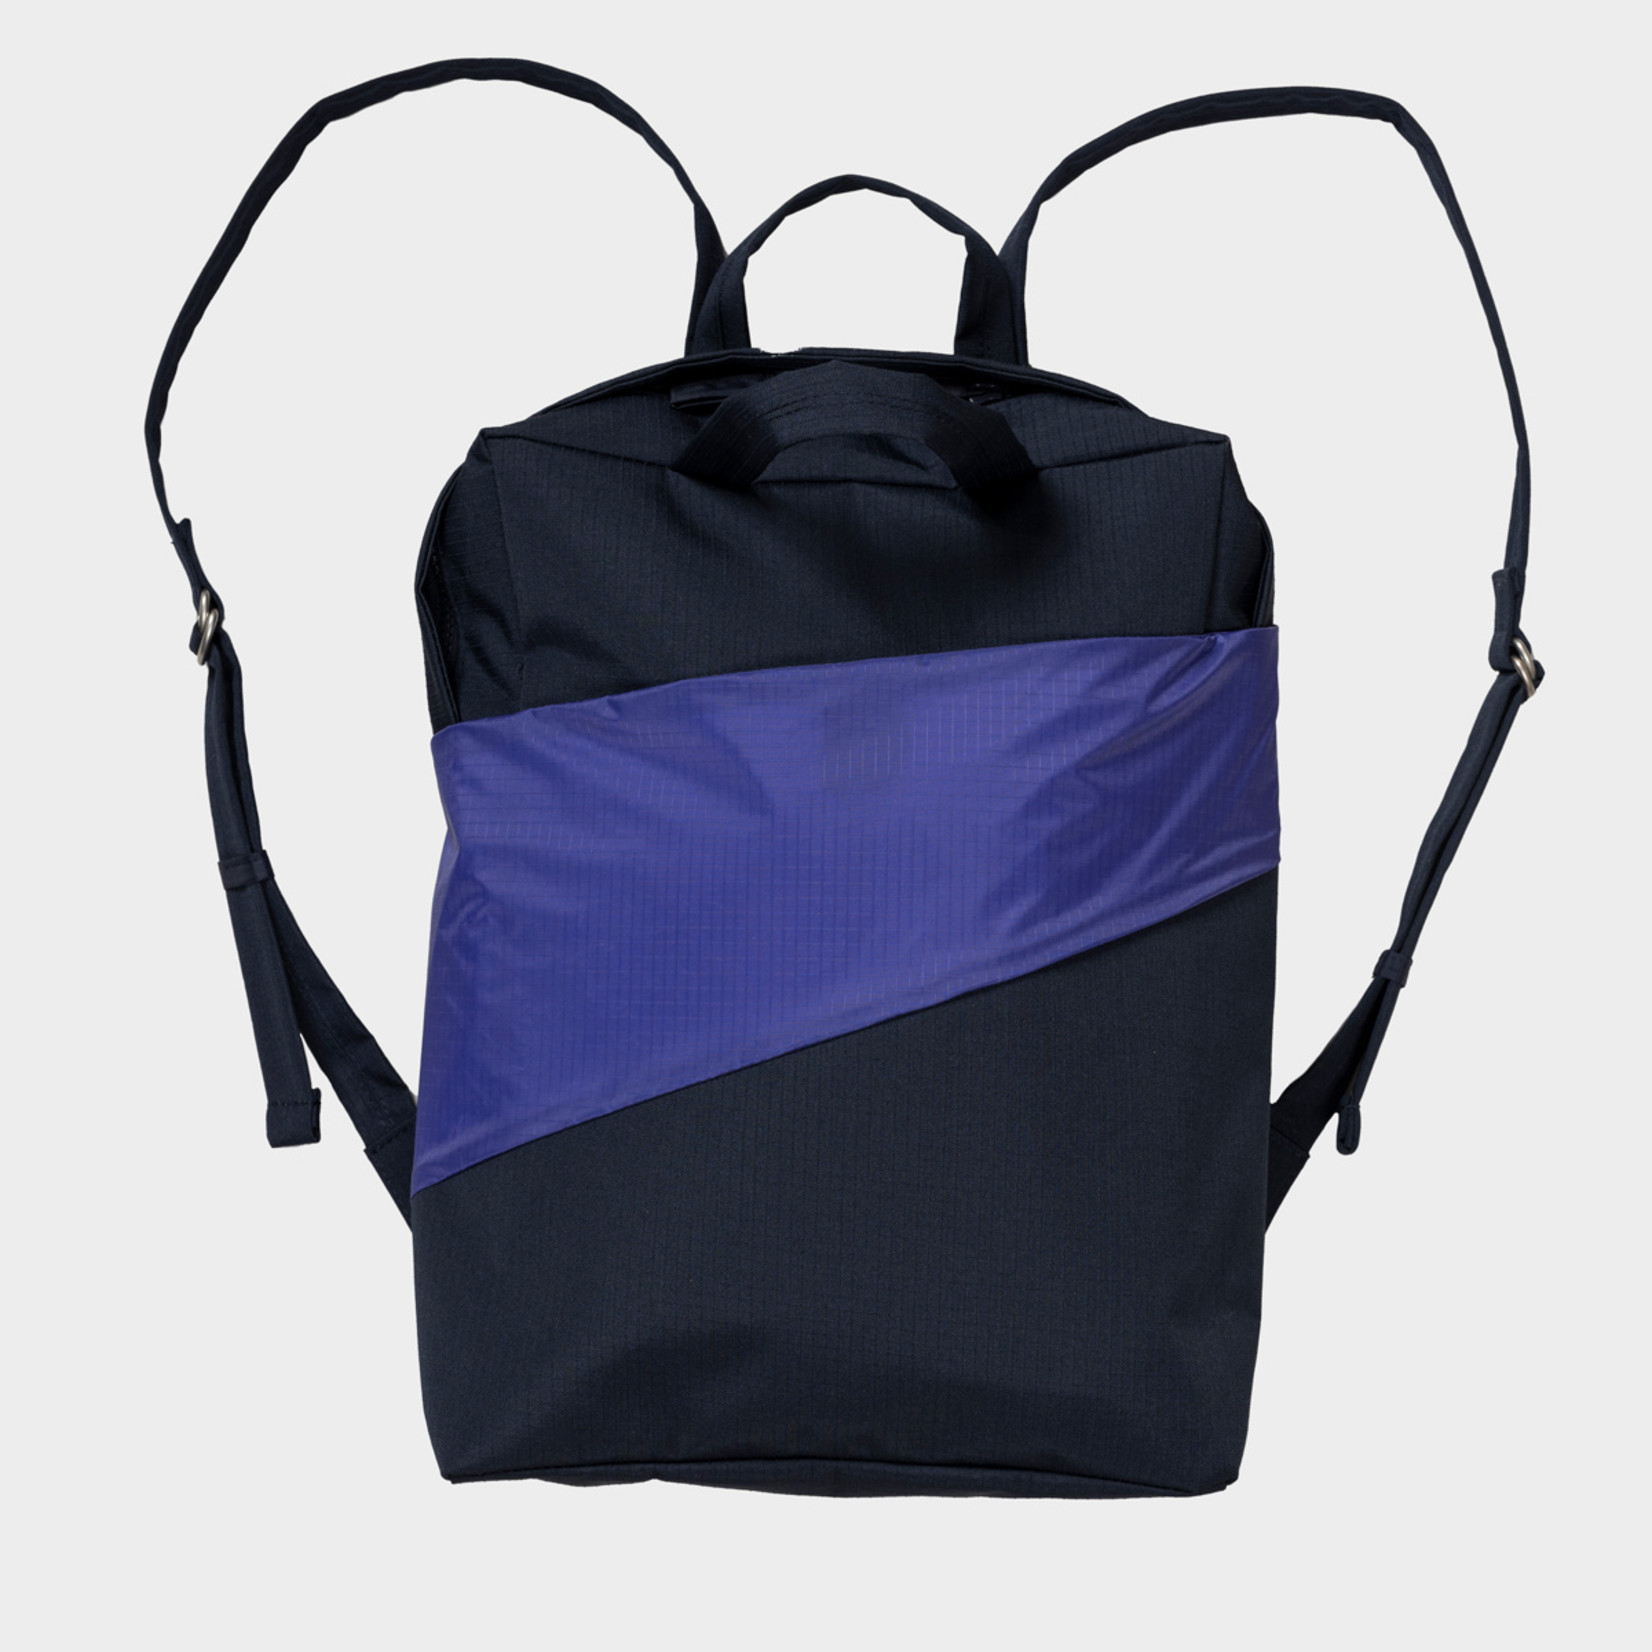 Susan Bijl Susan Bijl - The New Backpack (INSIGHT) Water & Drift